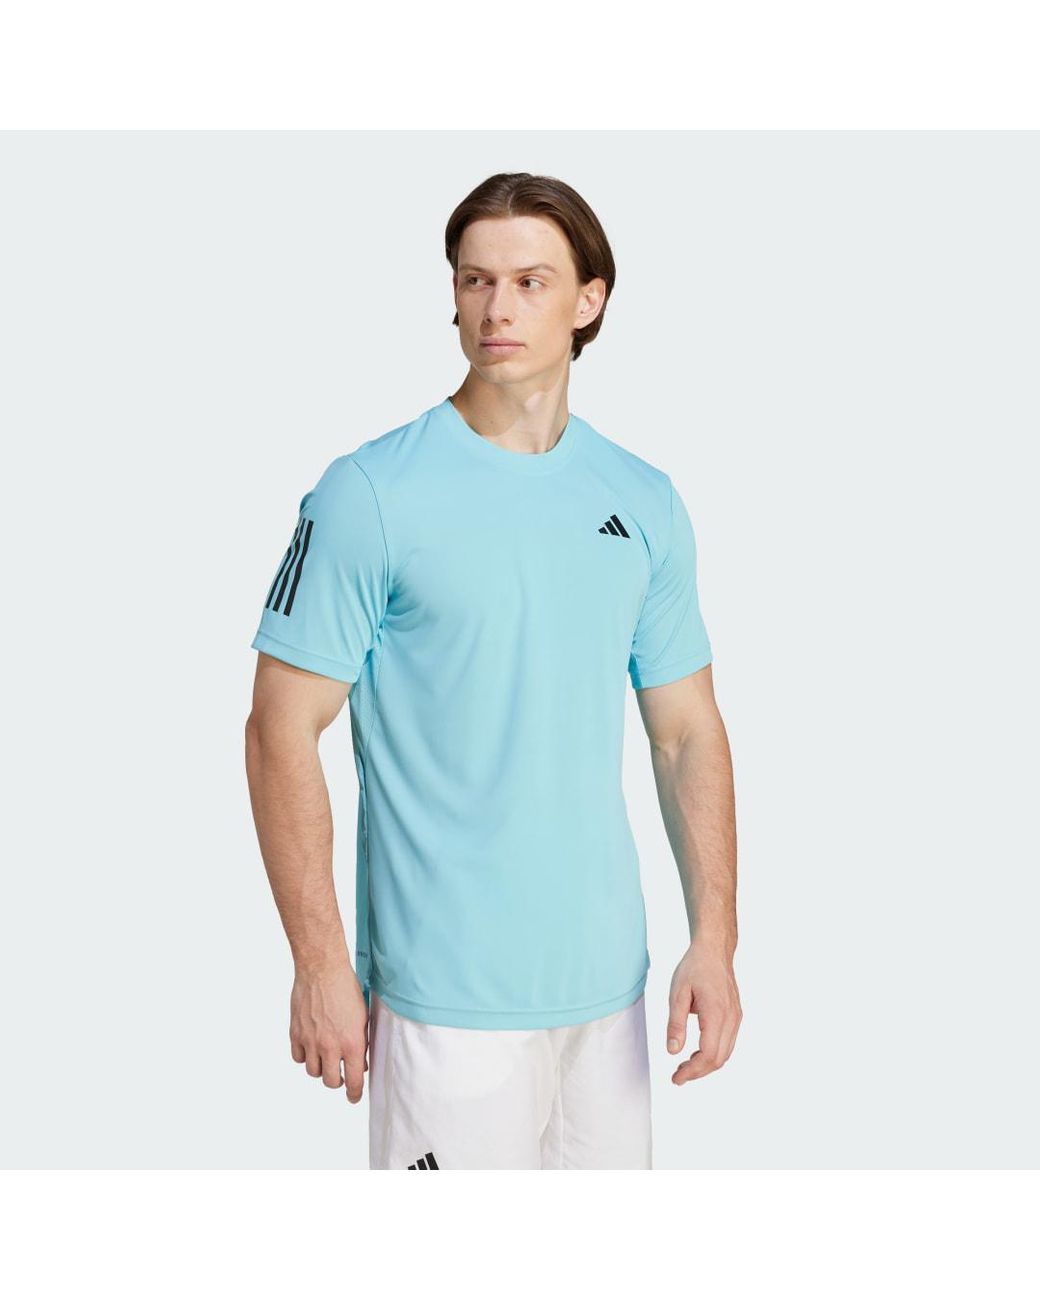 Camiseta Tenis Club 3 bandas adidas de hombre de color Azul | Lyst